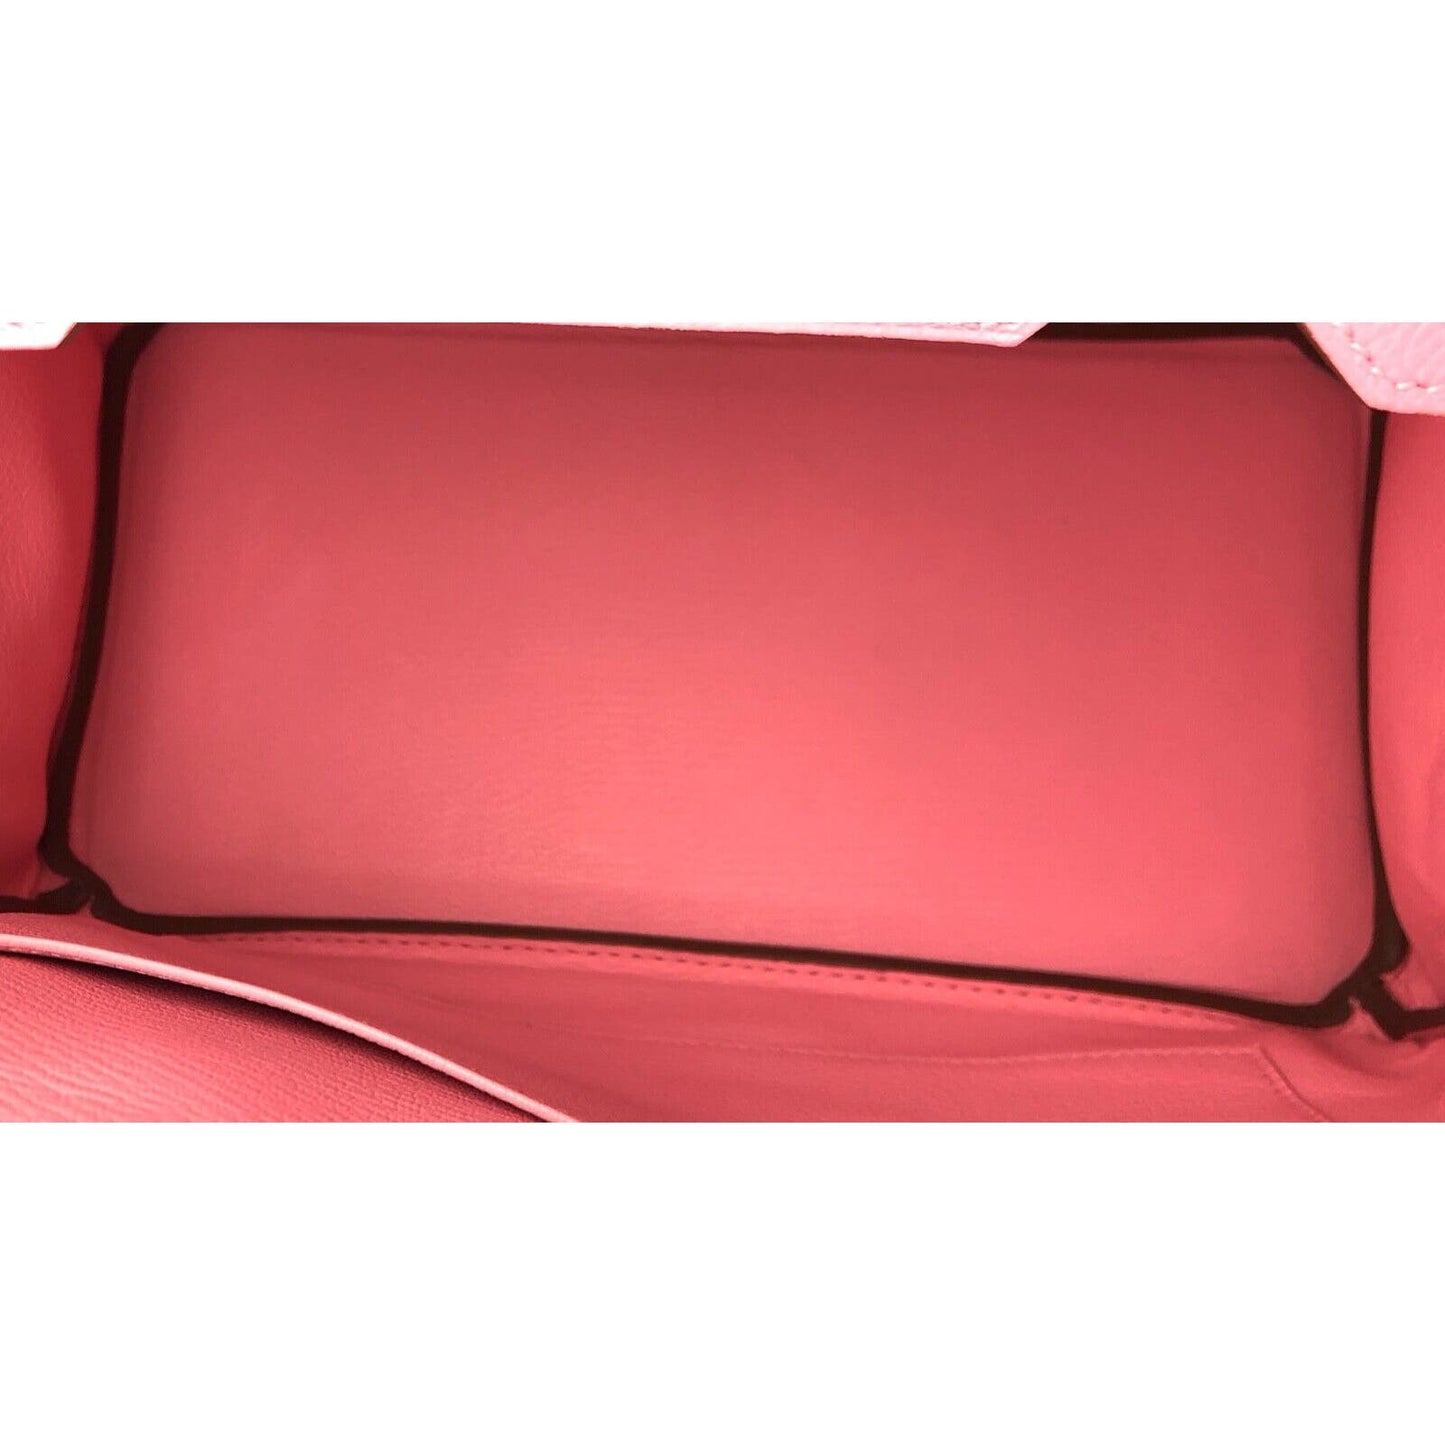 Hermes Birkin 30 Rose Confetti Pink Epsom Leather Bag Handbag Palladium Hardware